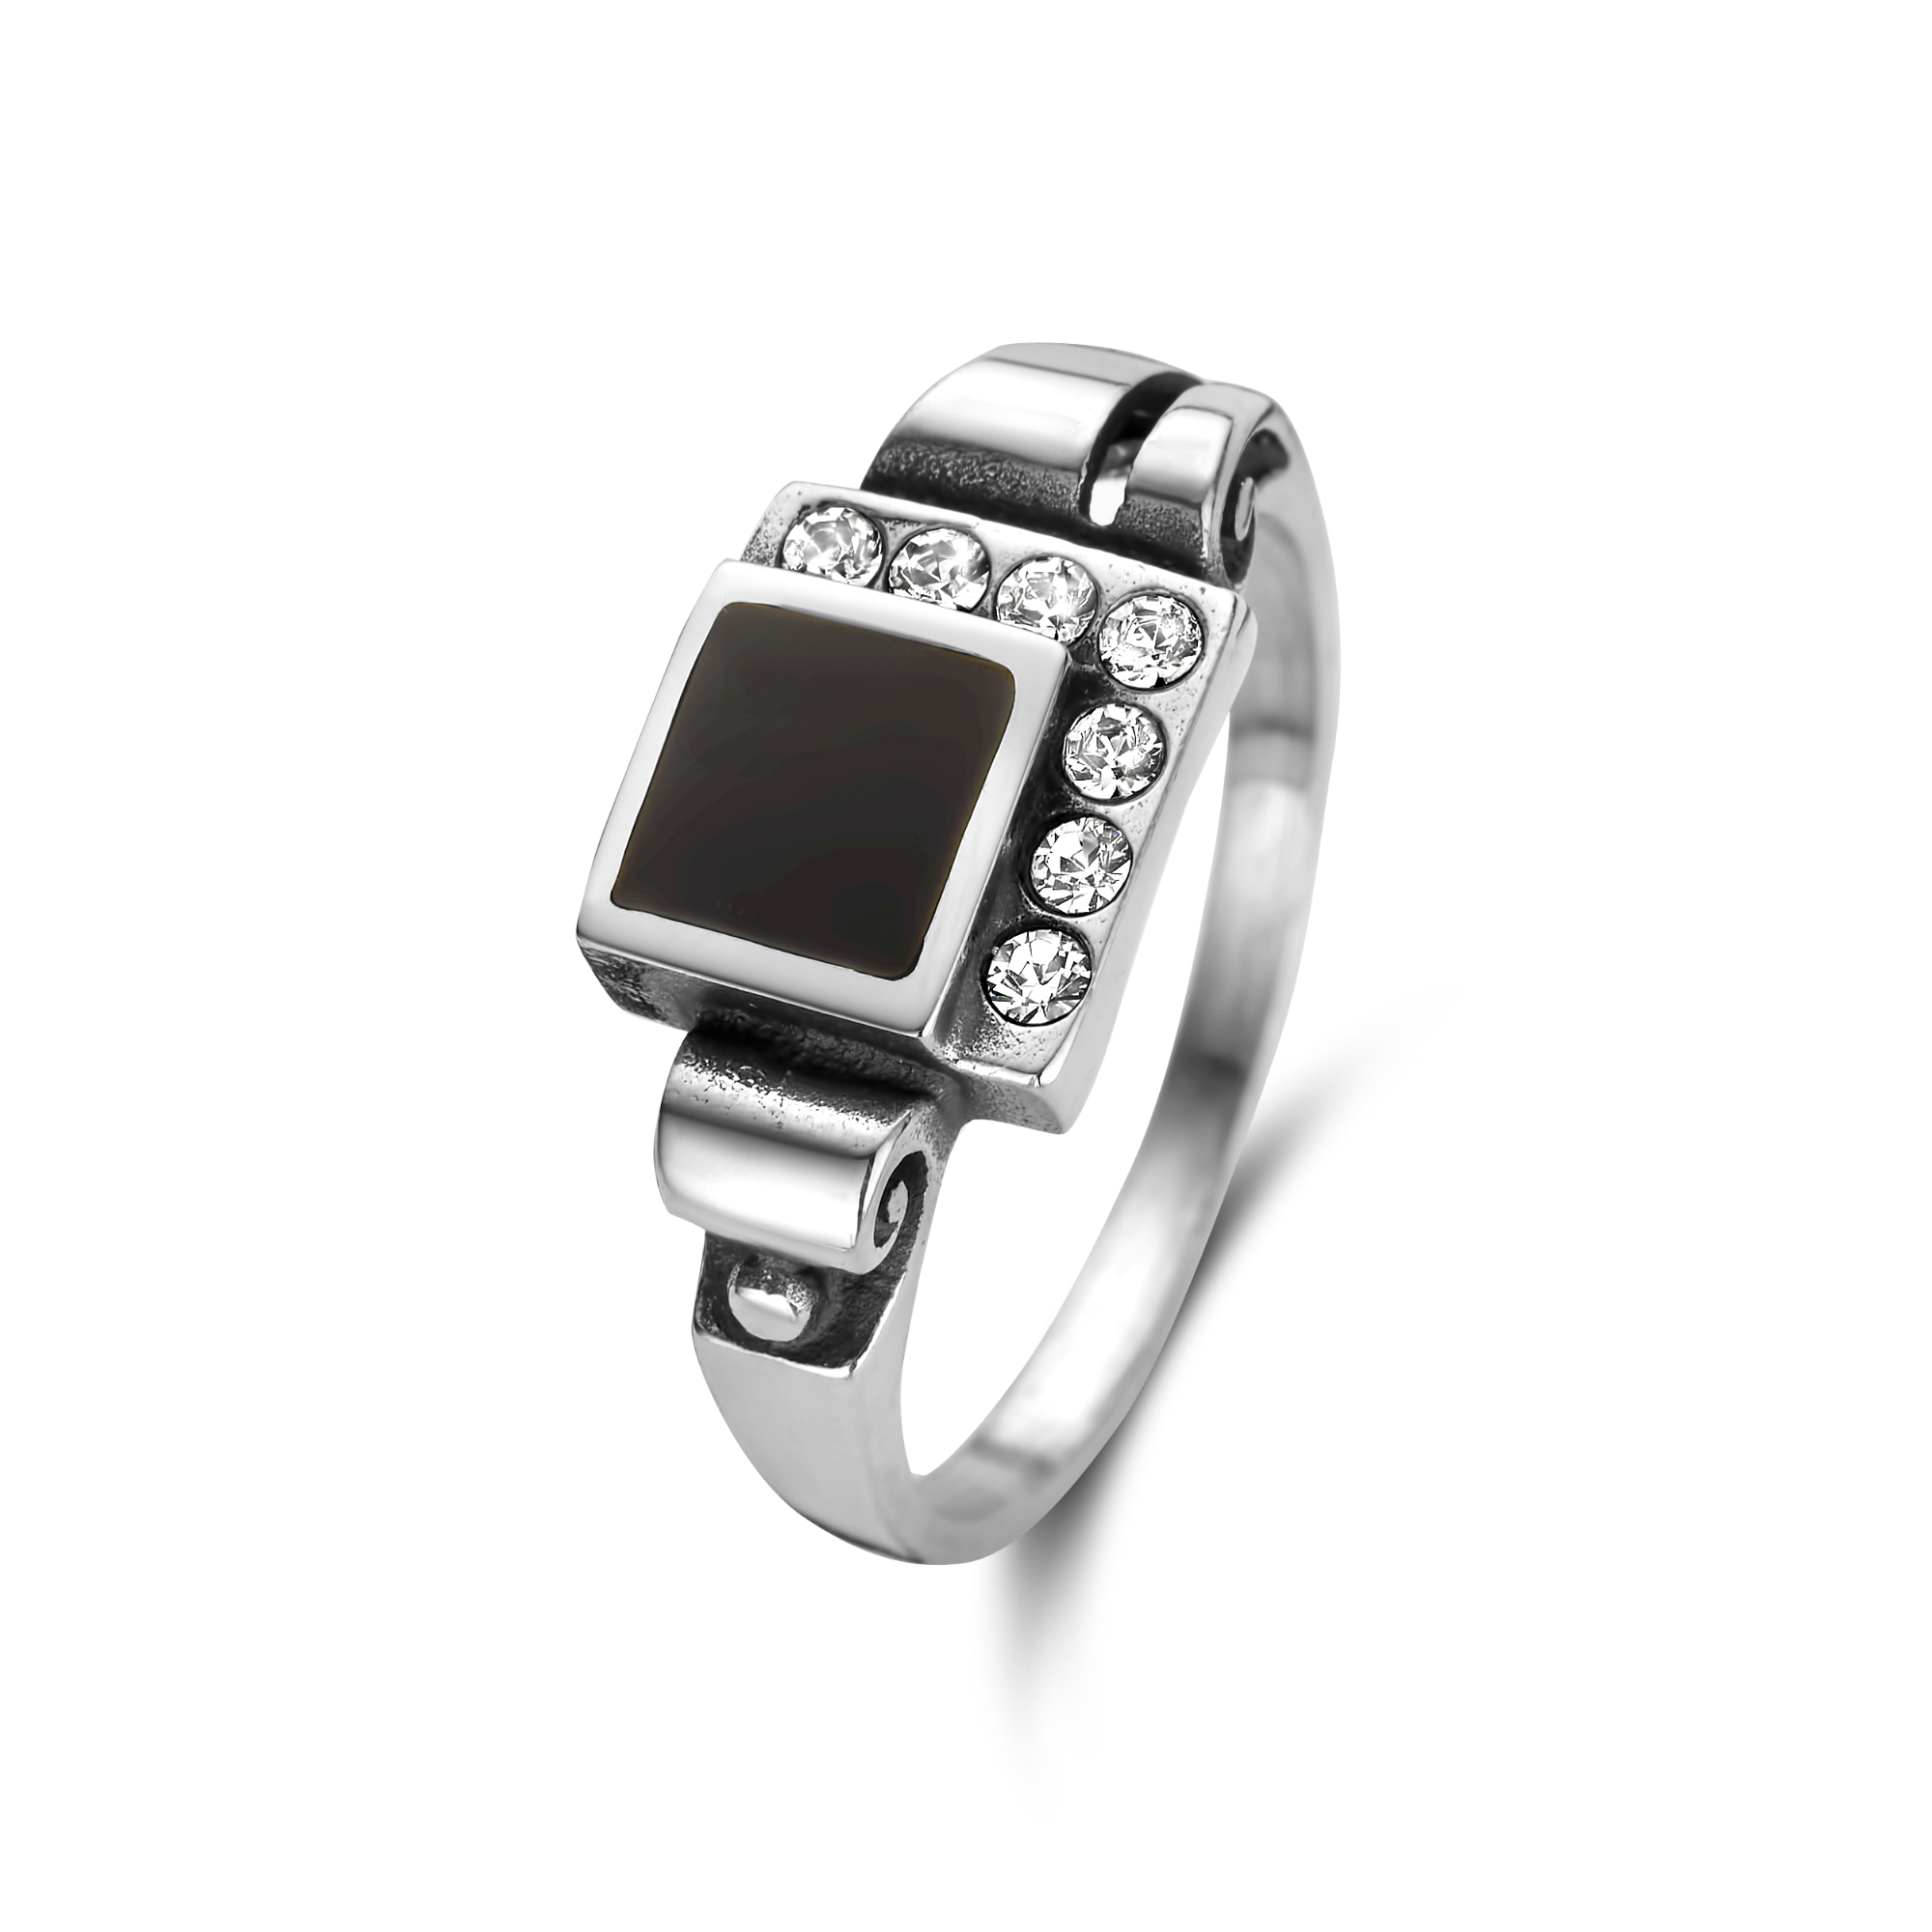 Sterling Zilveren ring met zwarte emaille en swarovski 14965 M